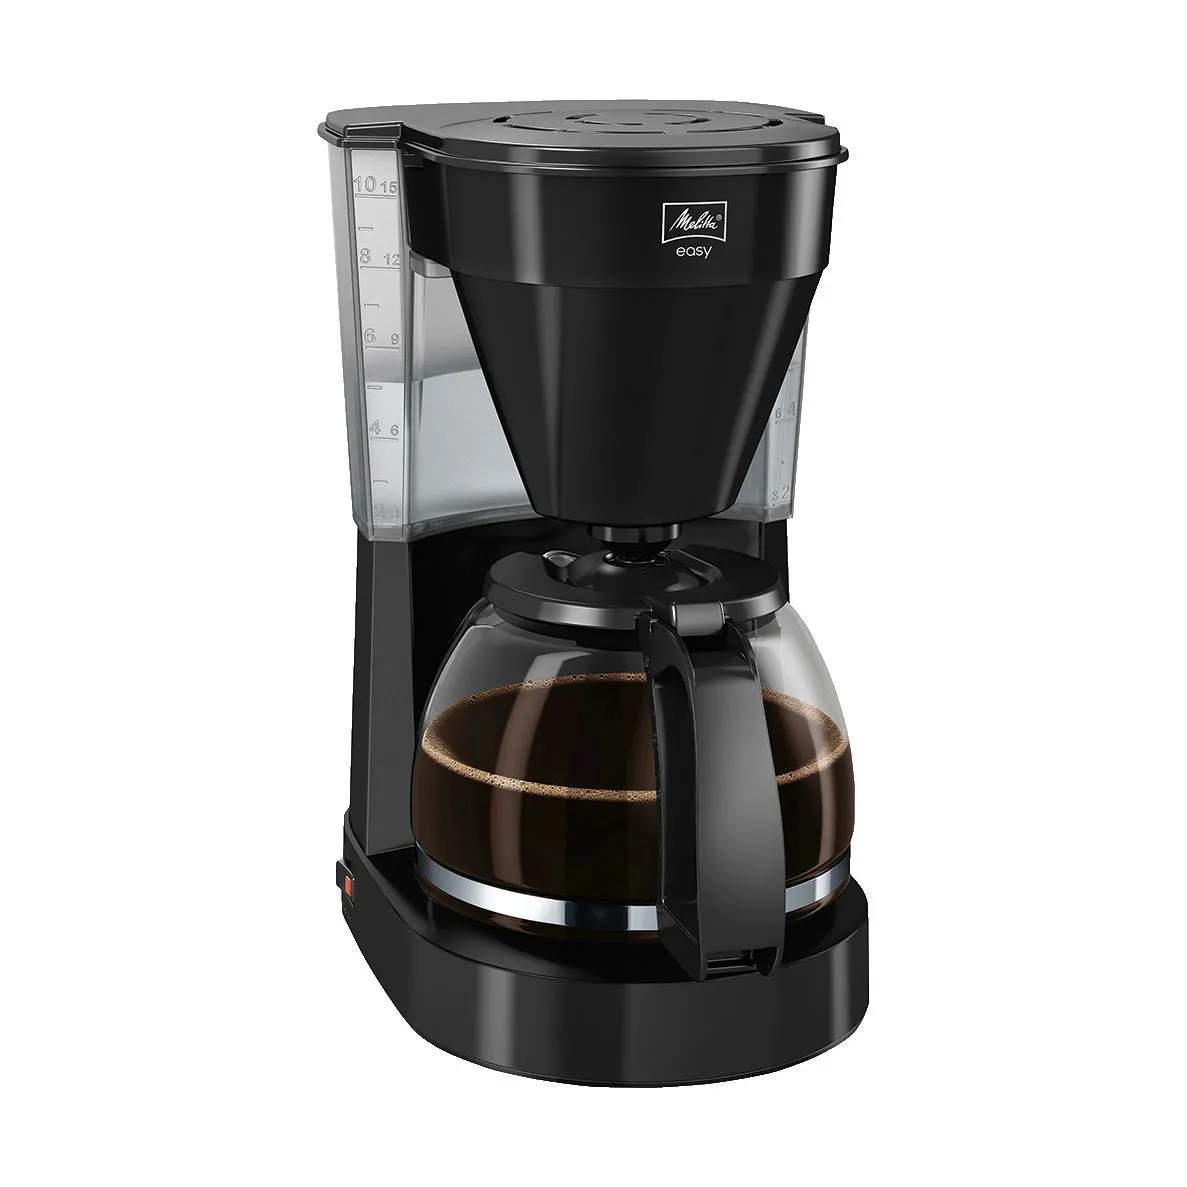 Kaffemaskine Easy II